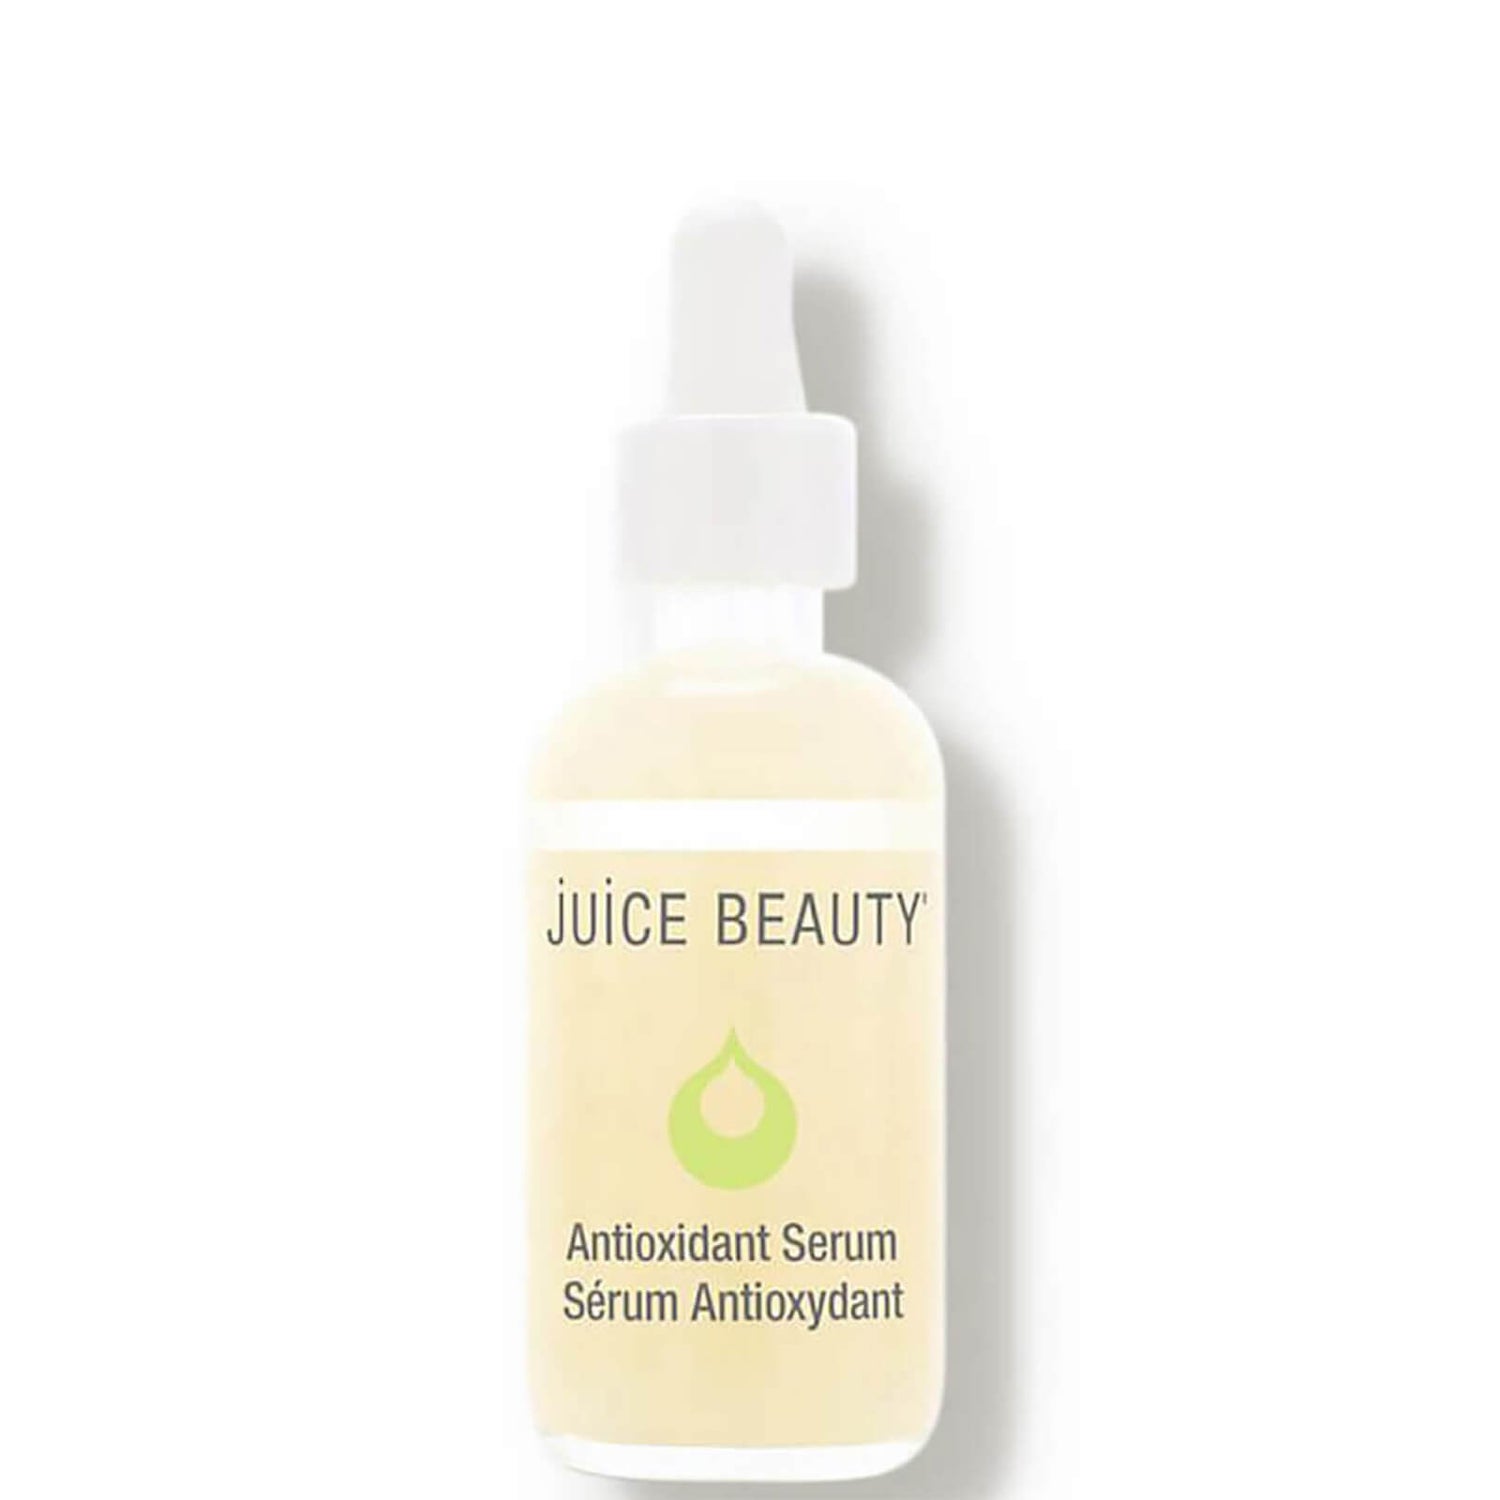 Juice Beauty Antioxidant Serum (2 fl. oz.)